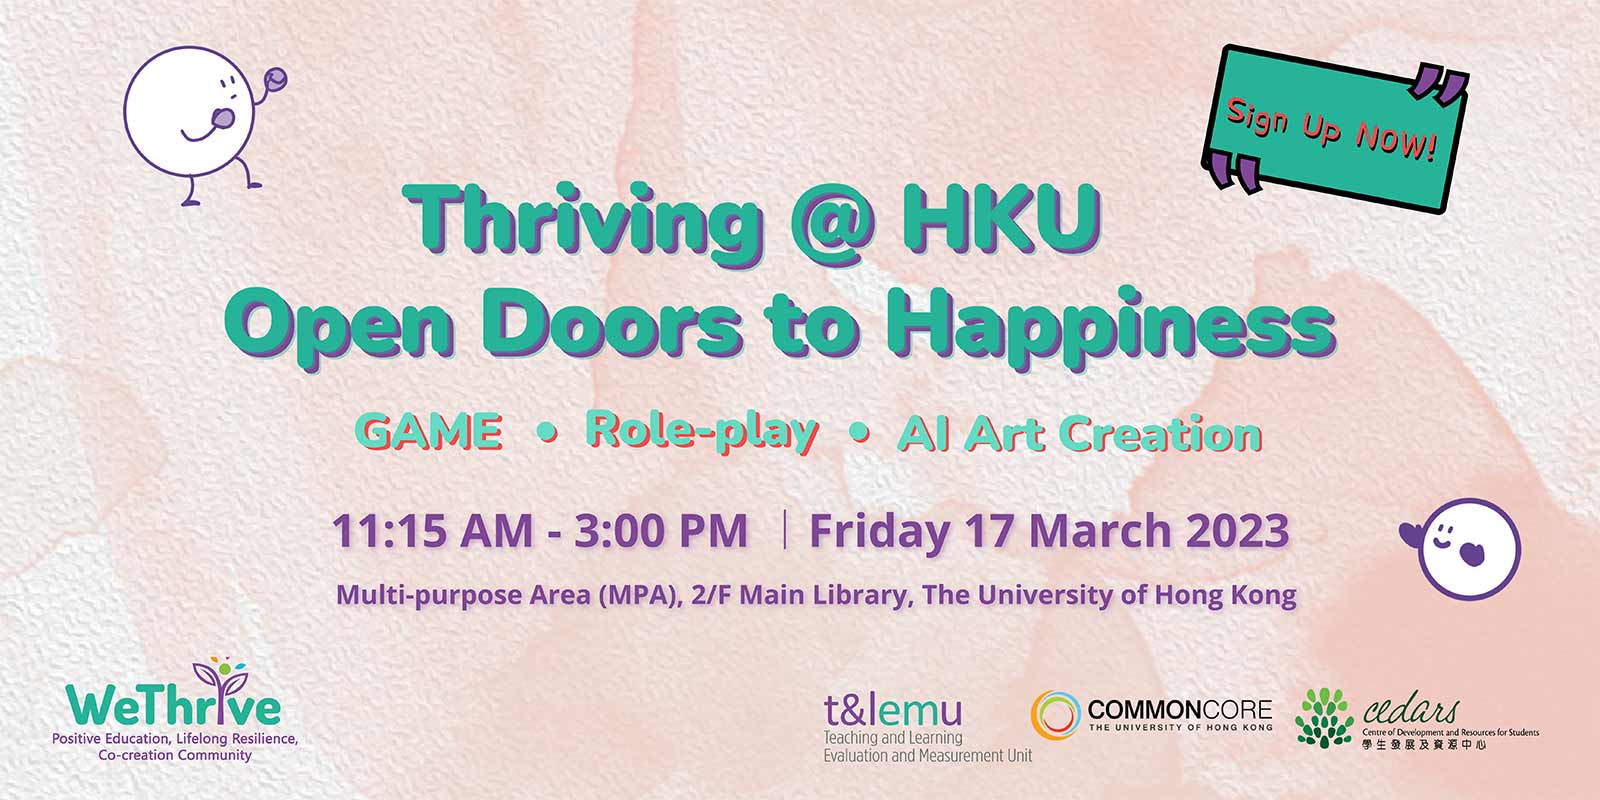 Thriving @ HKU - Open Doors to Happiness